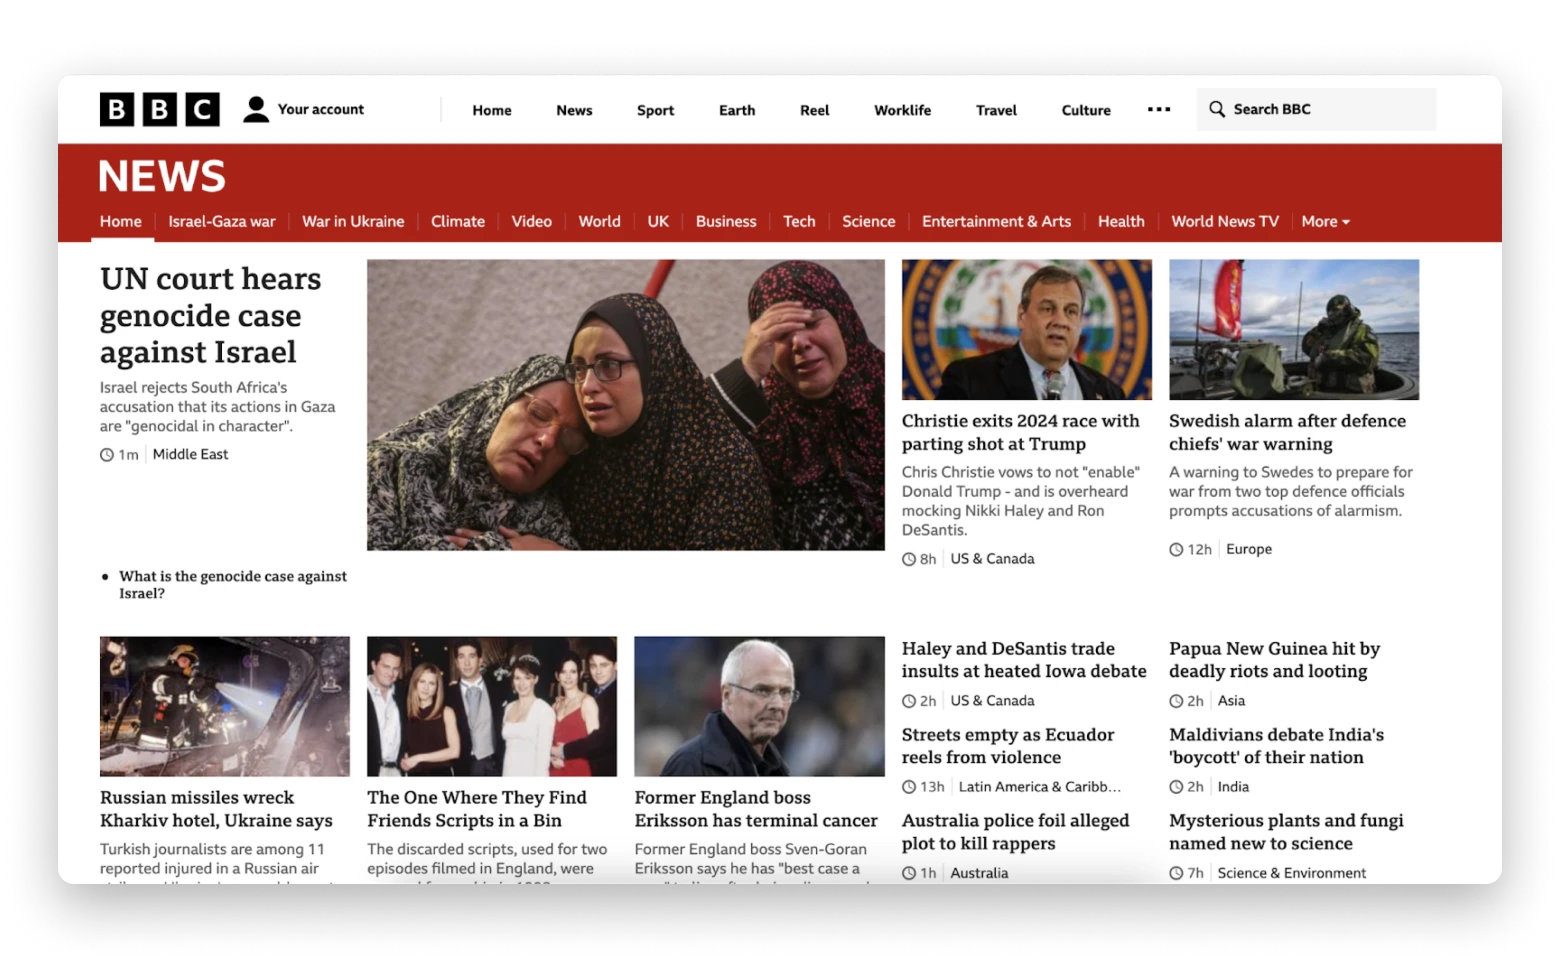 BBC News home page